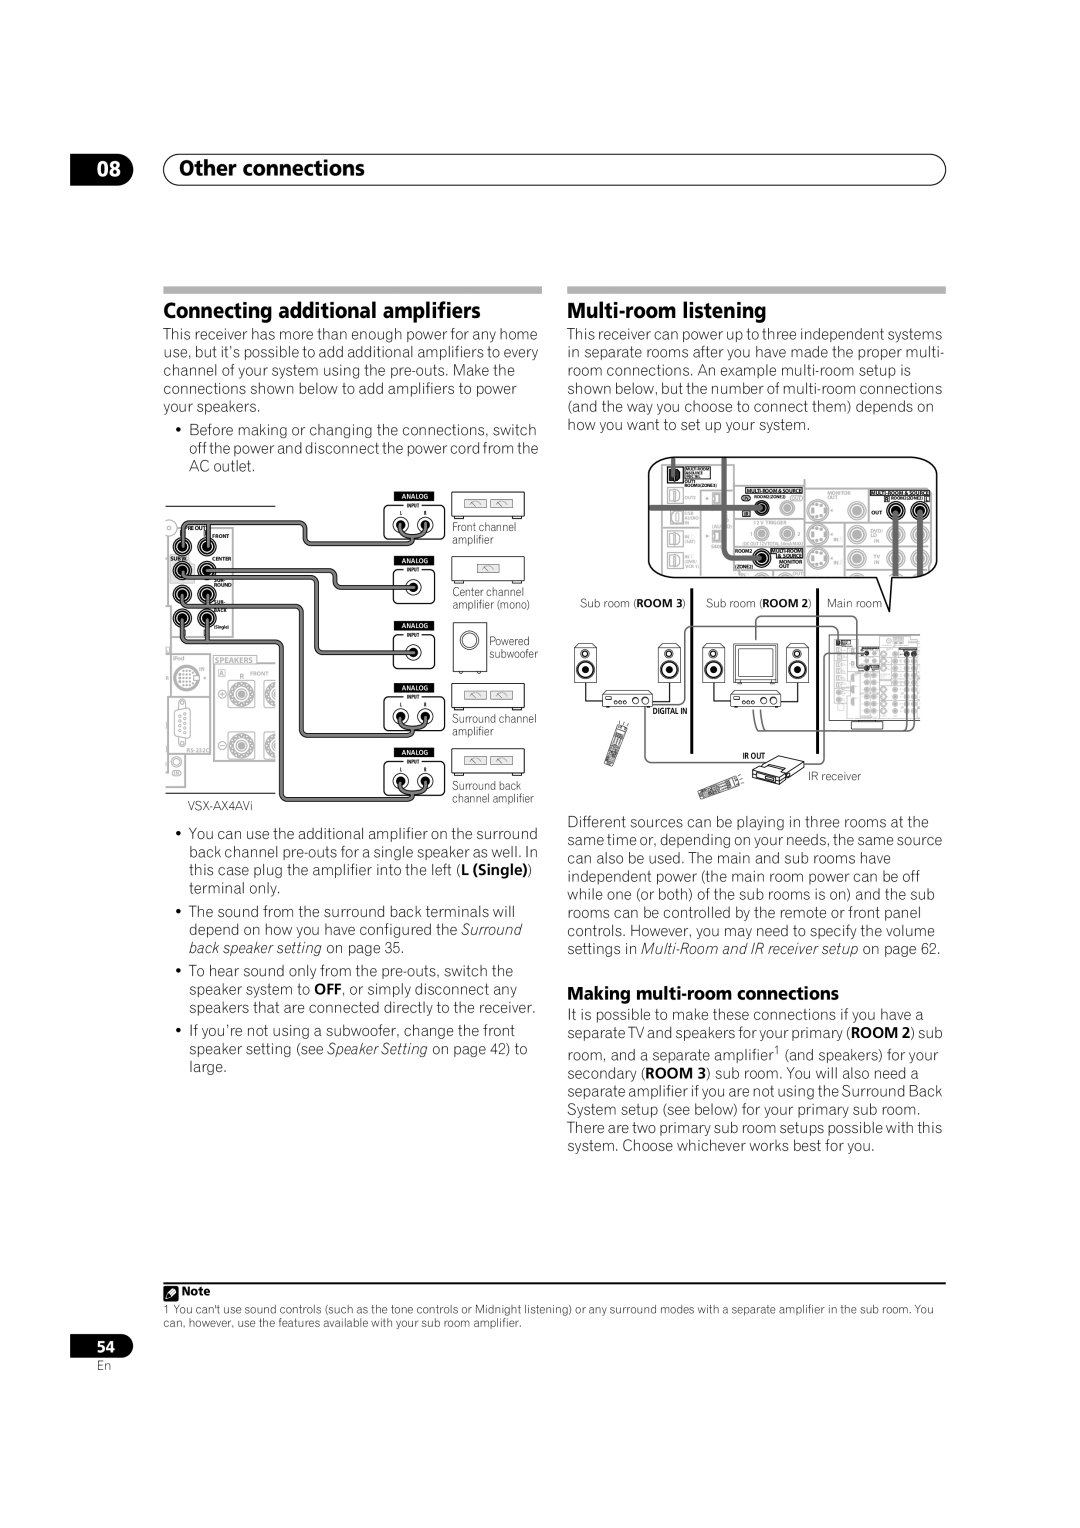 Pioneer VSX-AX2AV-G, VSX-AX4AVi-G manual Connecting additional amplifiers, Multi-roomlistening, Making multi-roomconnections 